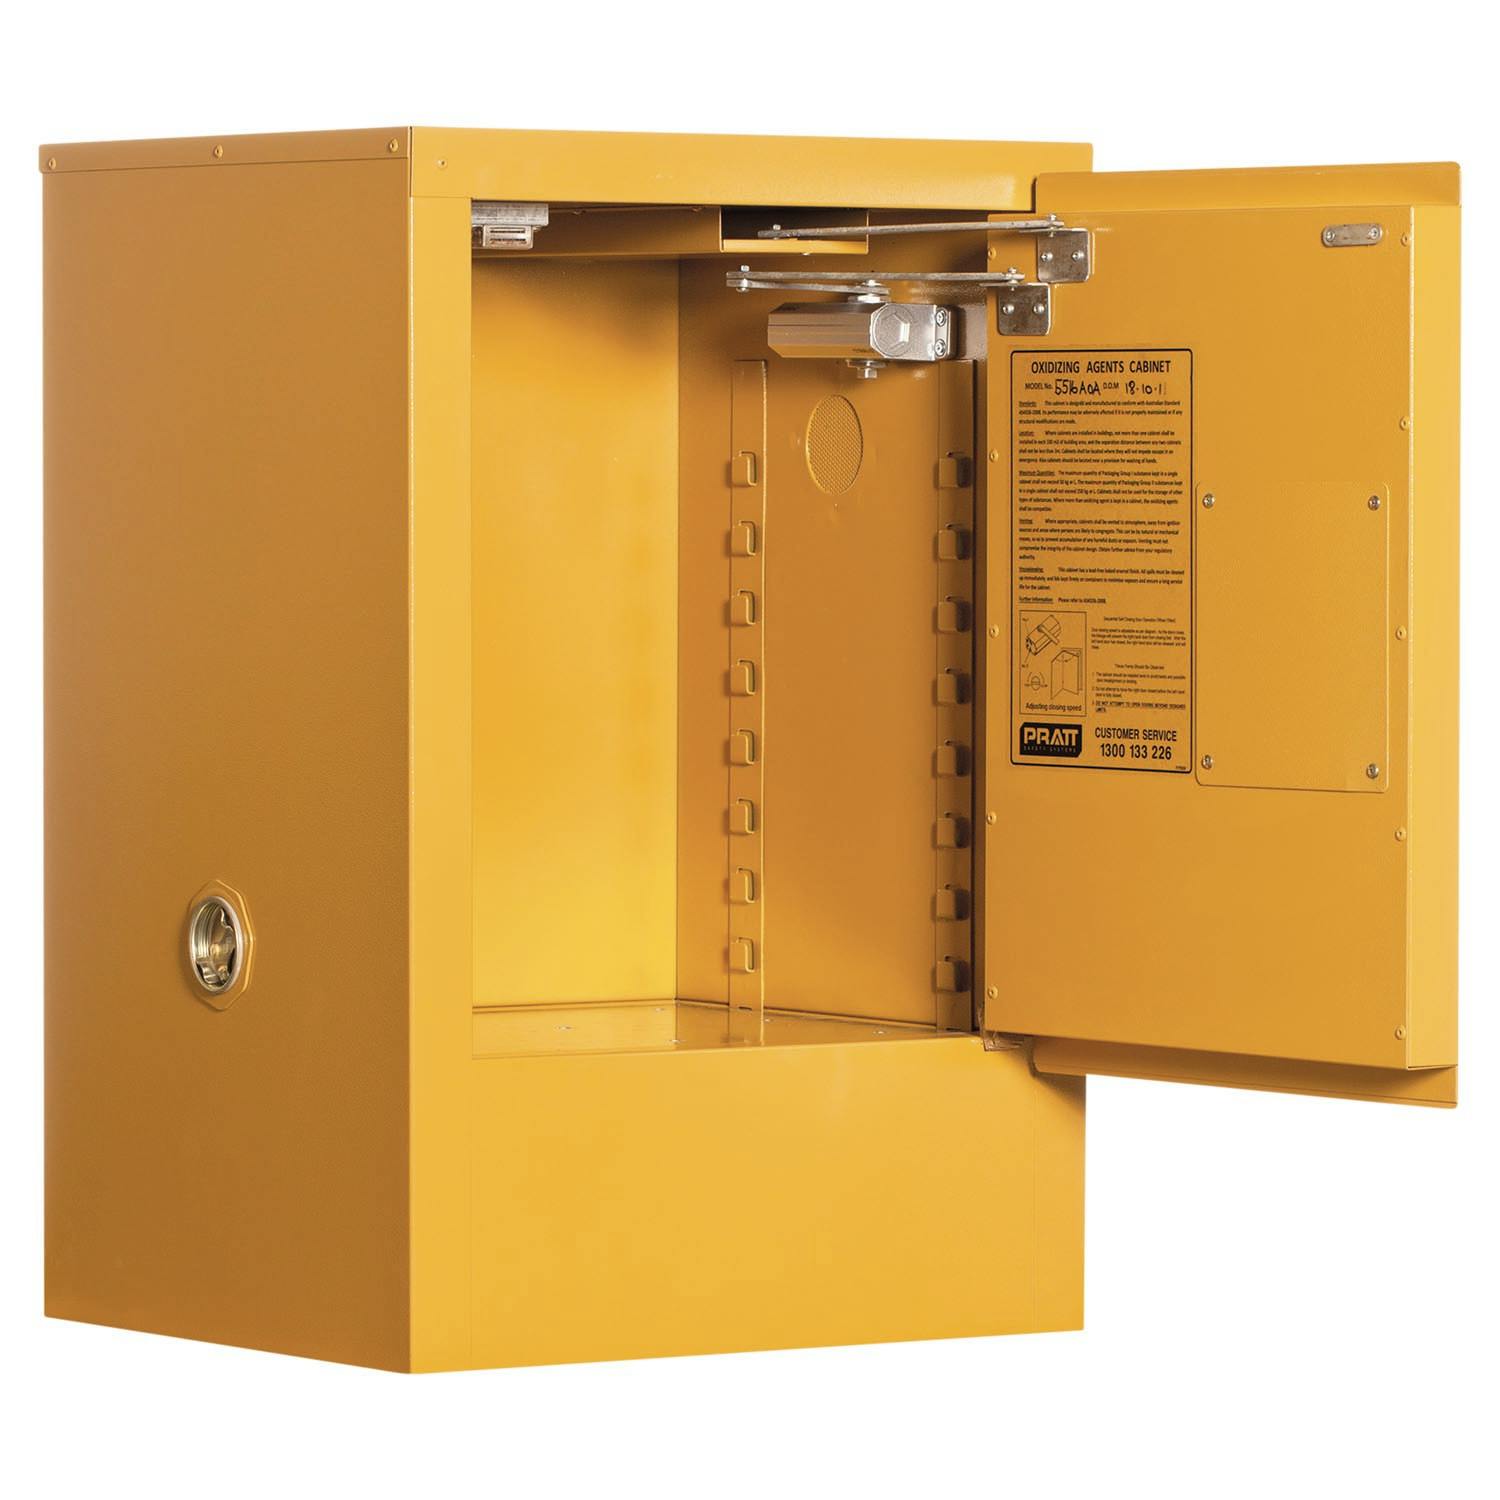 Pratt Oxidizing Agent Storage Cabinet: 30L - 1 Door - 1 Shelf